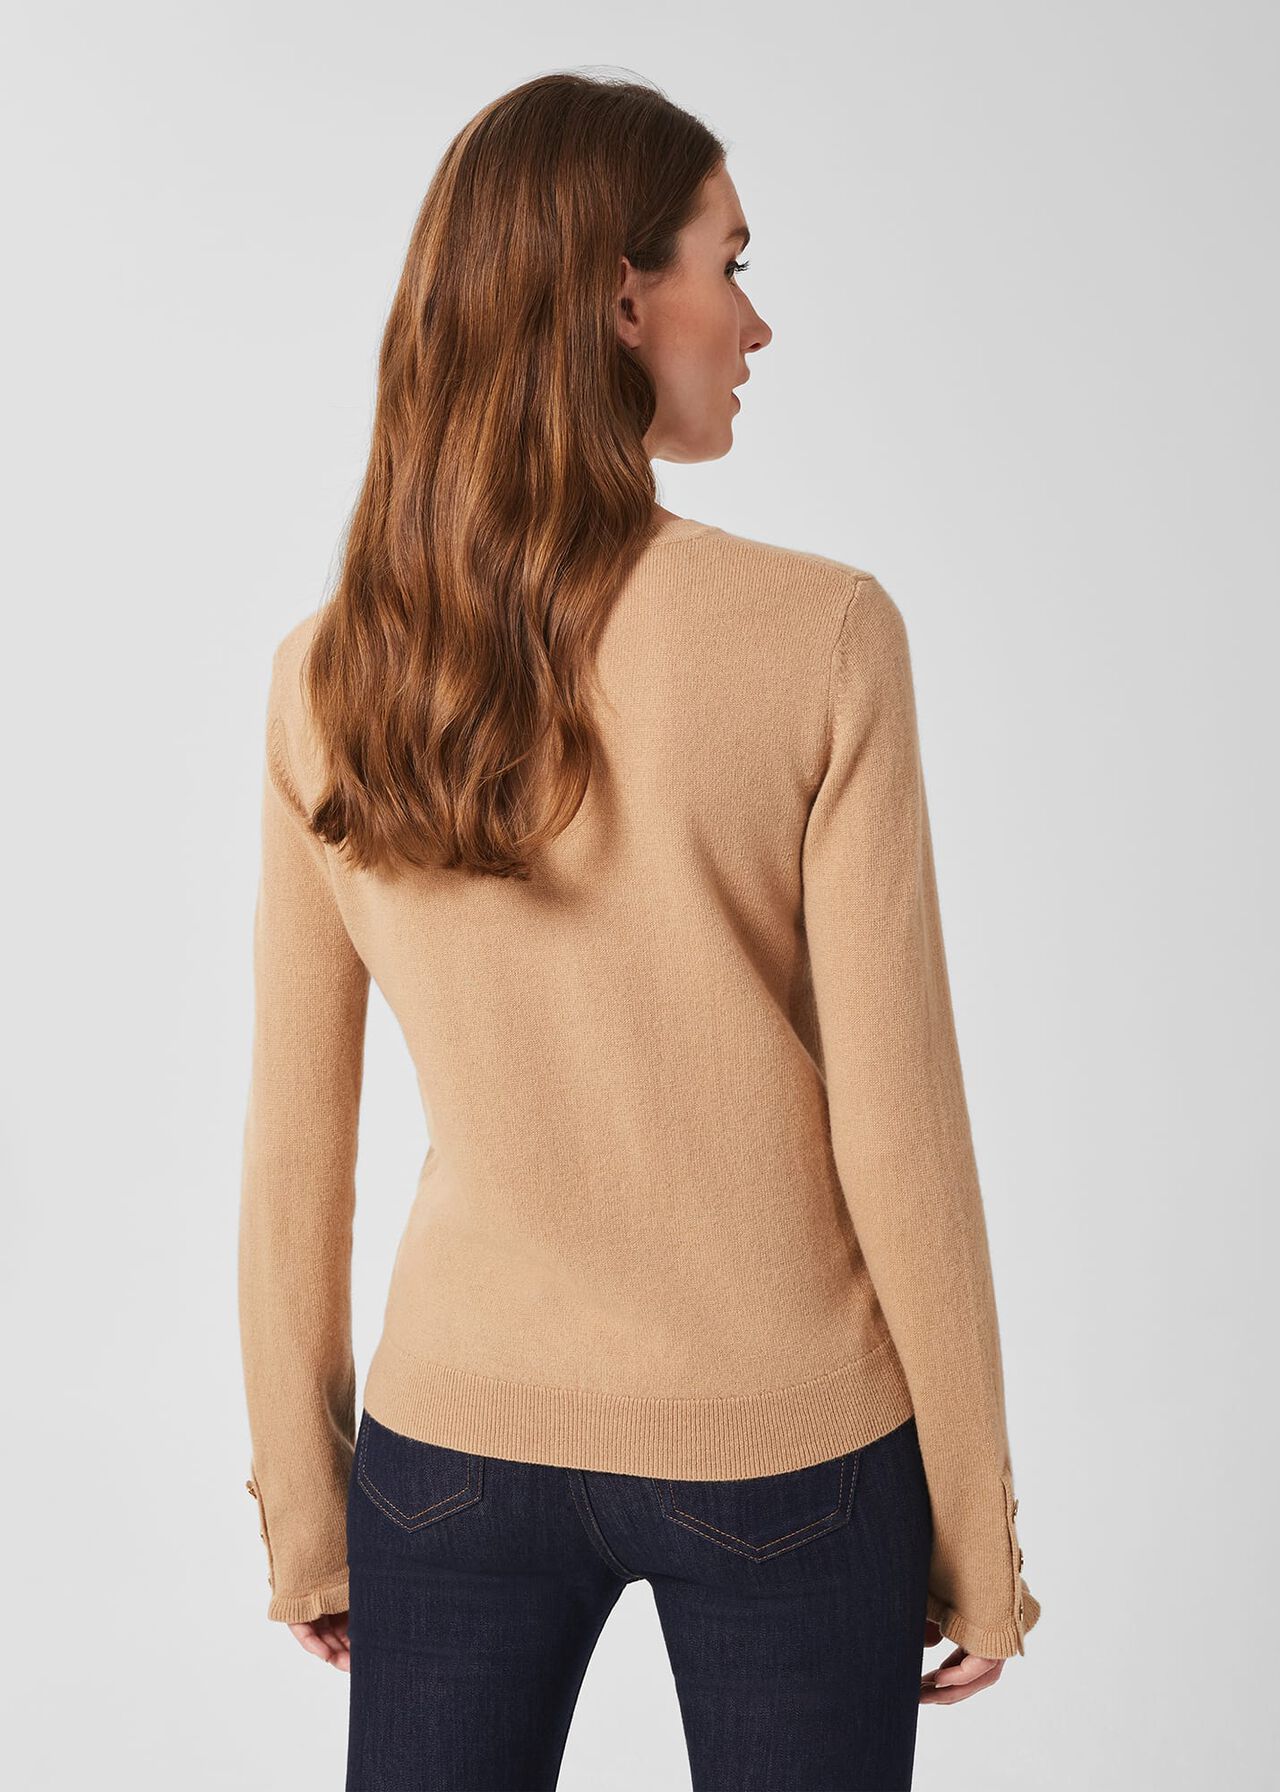 Imogen Wool Cashmere Sweater, Camel, hi-res